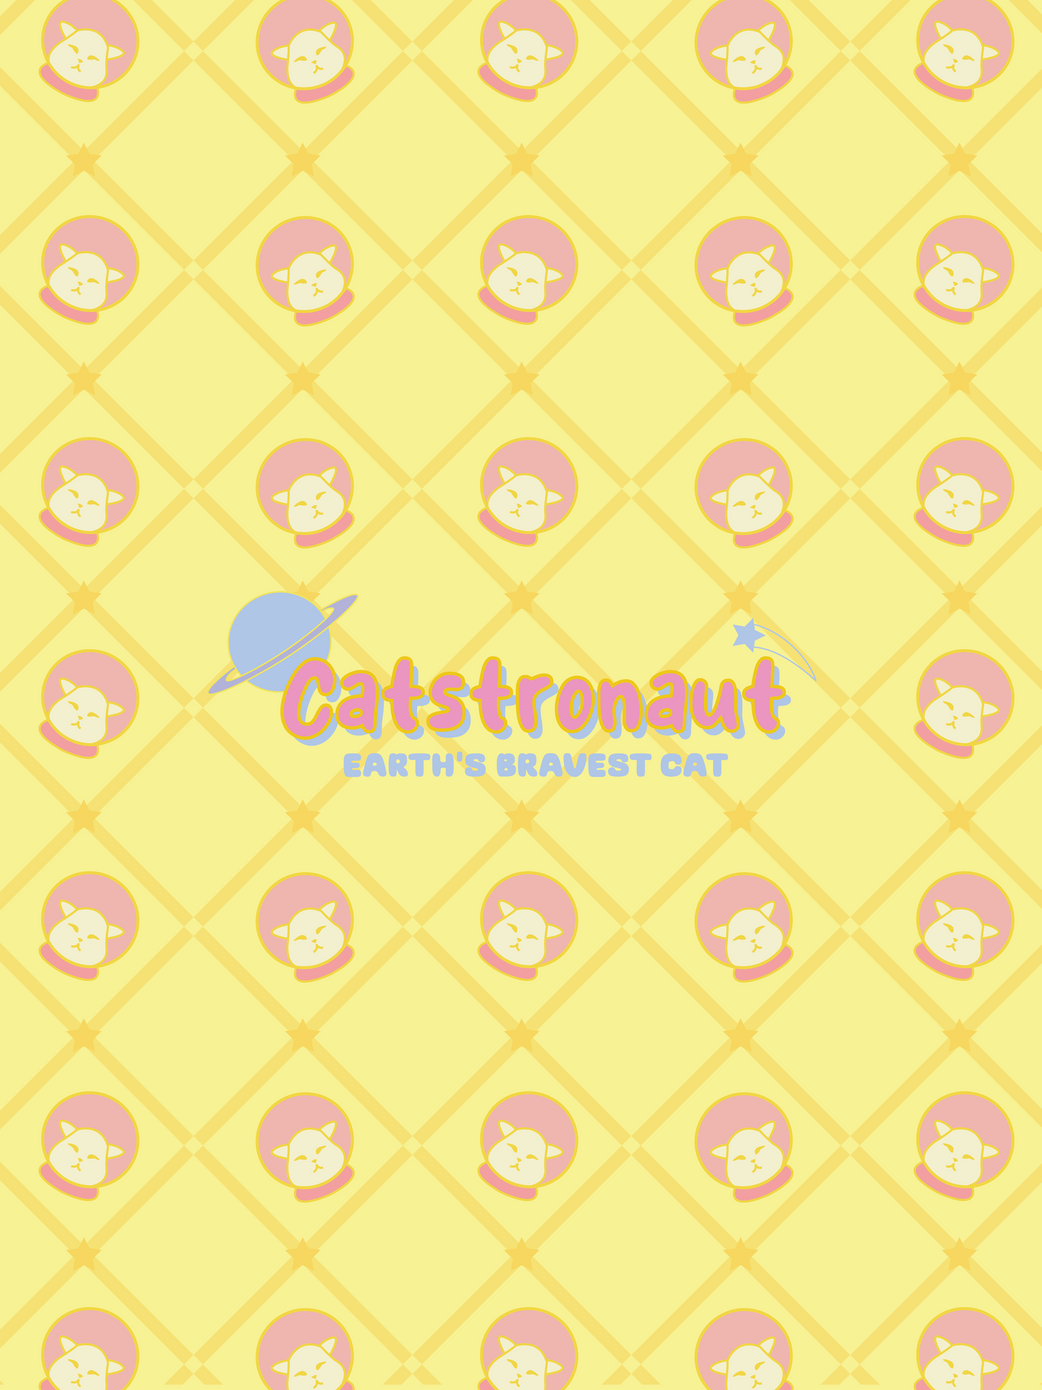 Free Yellow HD Phone wallpaper of Catstronaut (Cute Cat Astronaut).